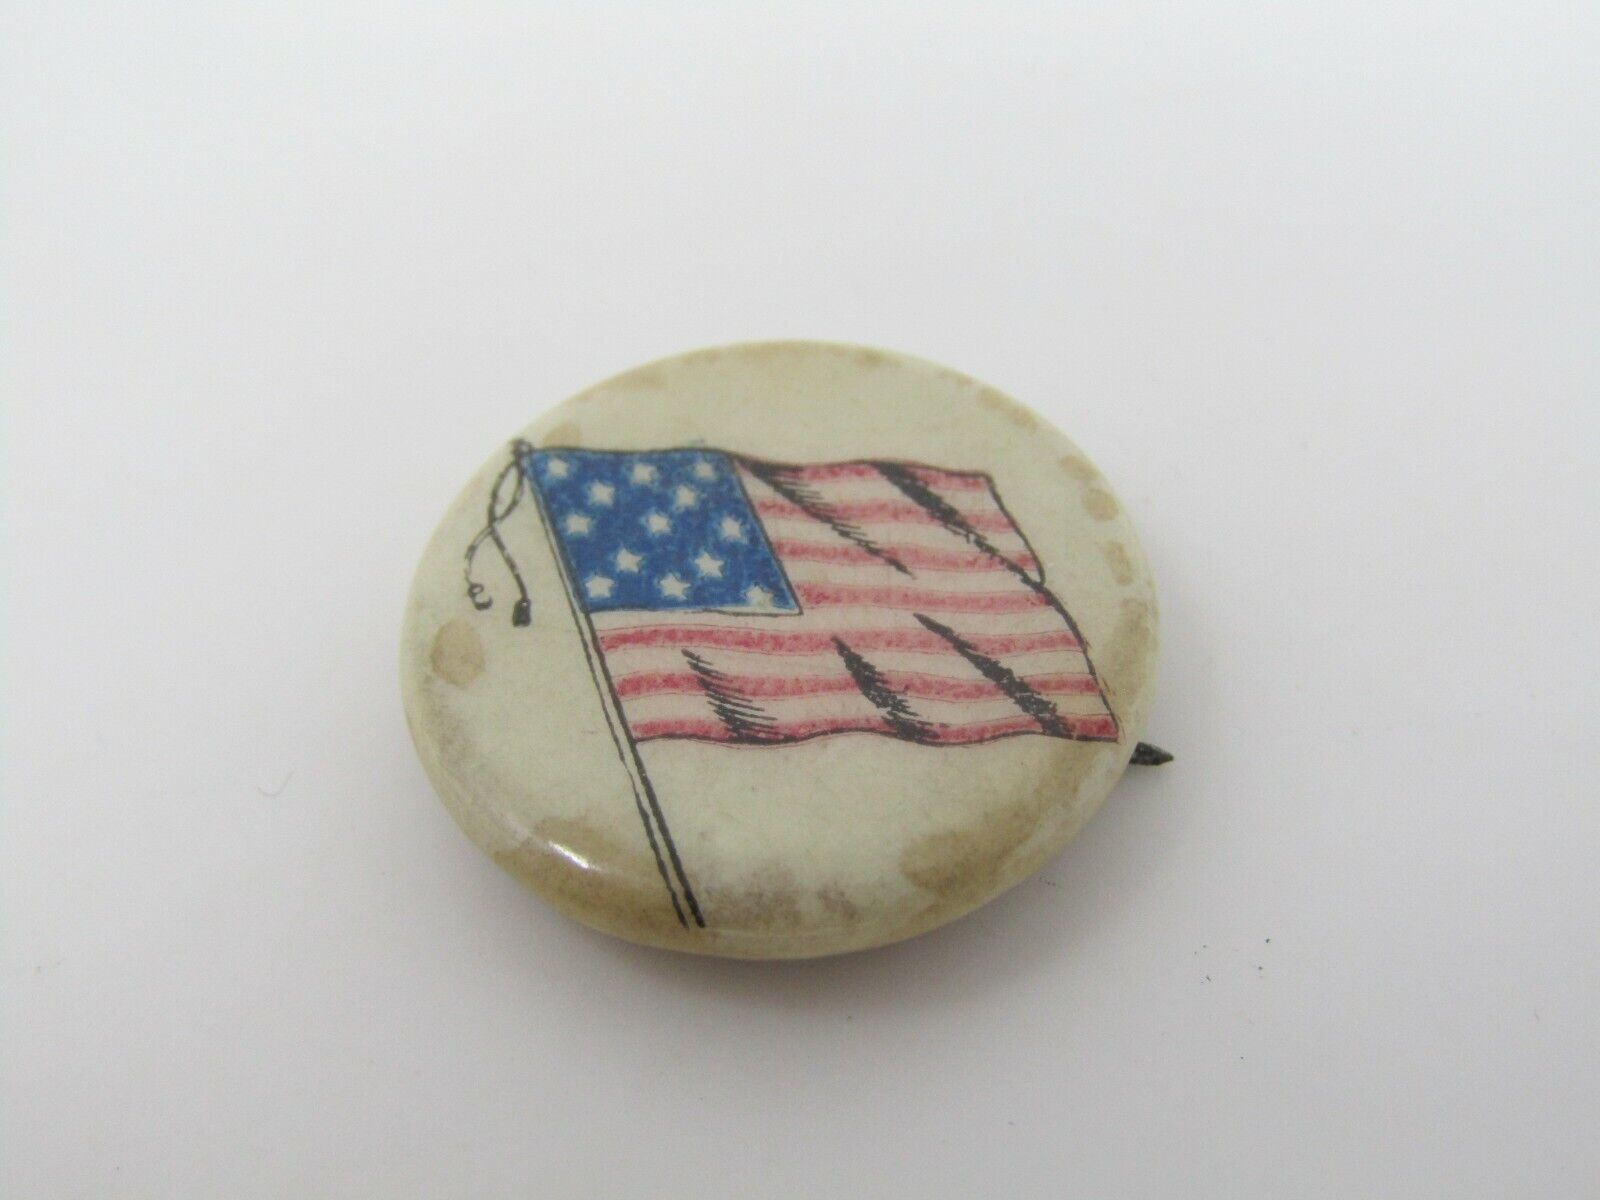 Antique Vintage American Flag Pin Button by Torsch & Franz Badge Co Baltimore 